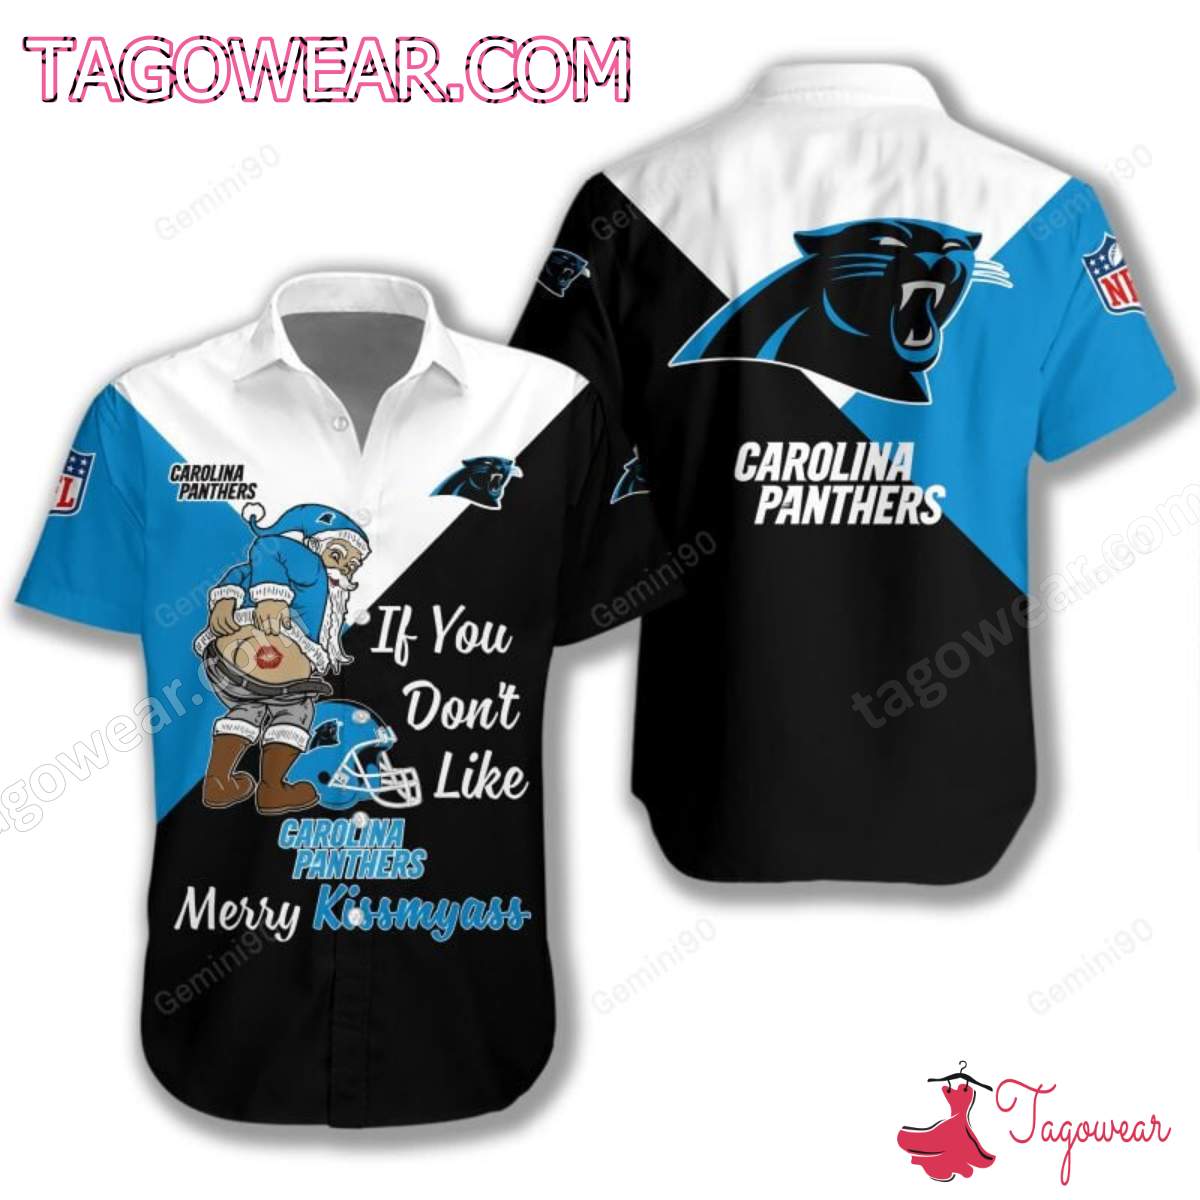 If You Don't Like Carolina Panthers Merry Kissmyass T-shirt, Polo, Hoodie a